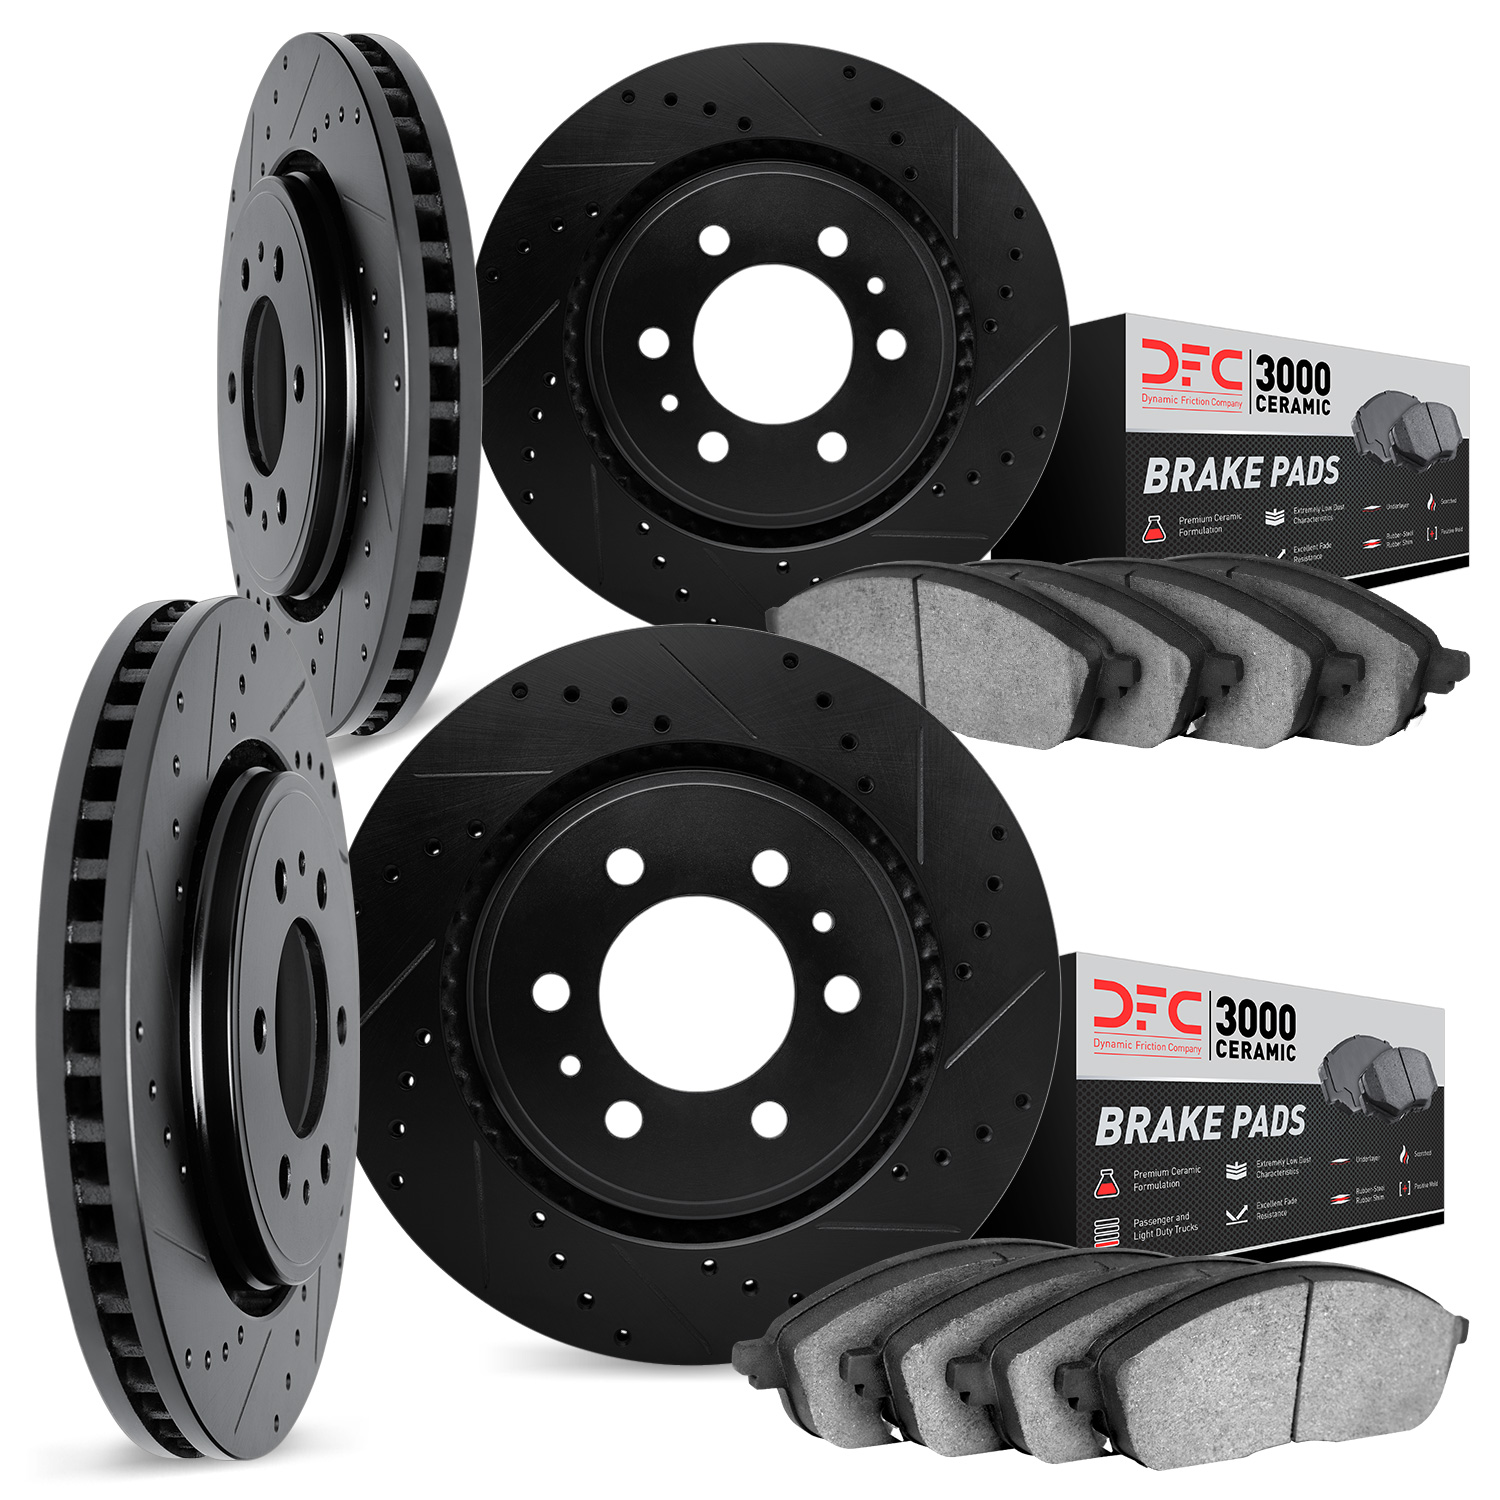 8304-67057 Drilled/Slotted Brake Rotors with 3000-Series Ceramic Brake Pads Kit [Black], Fits Select Multiple Makes/Models, Posi